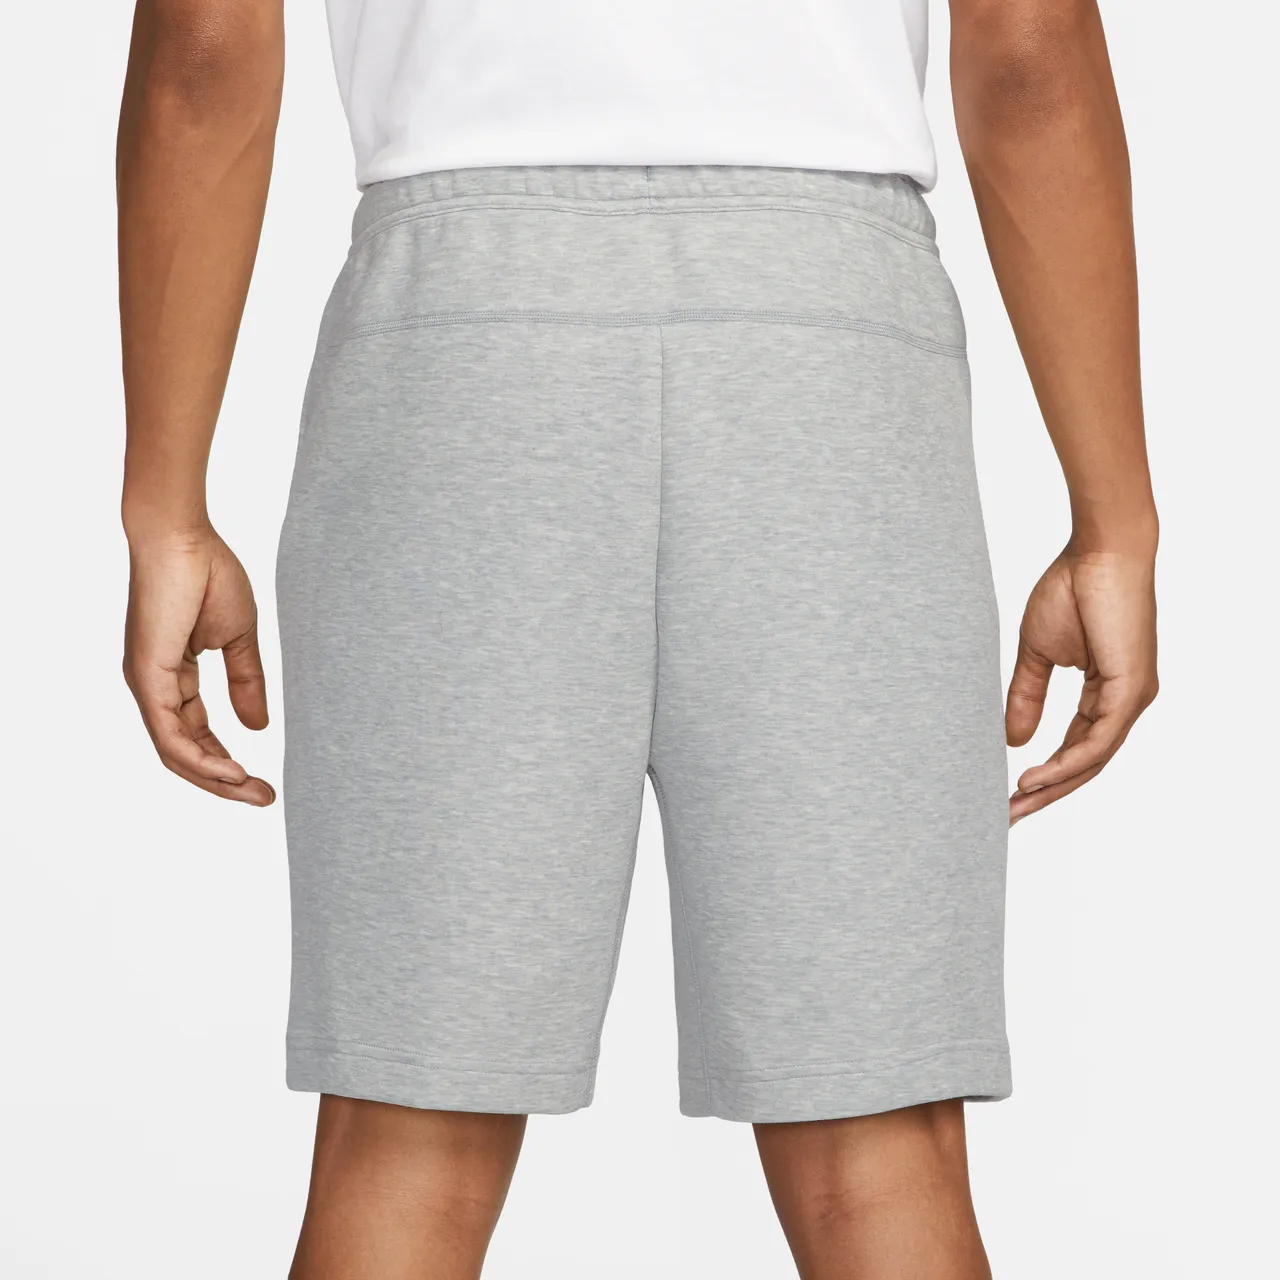 Nike Sportswear Tech Fleece Herrenshorts - Grau